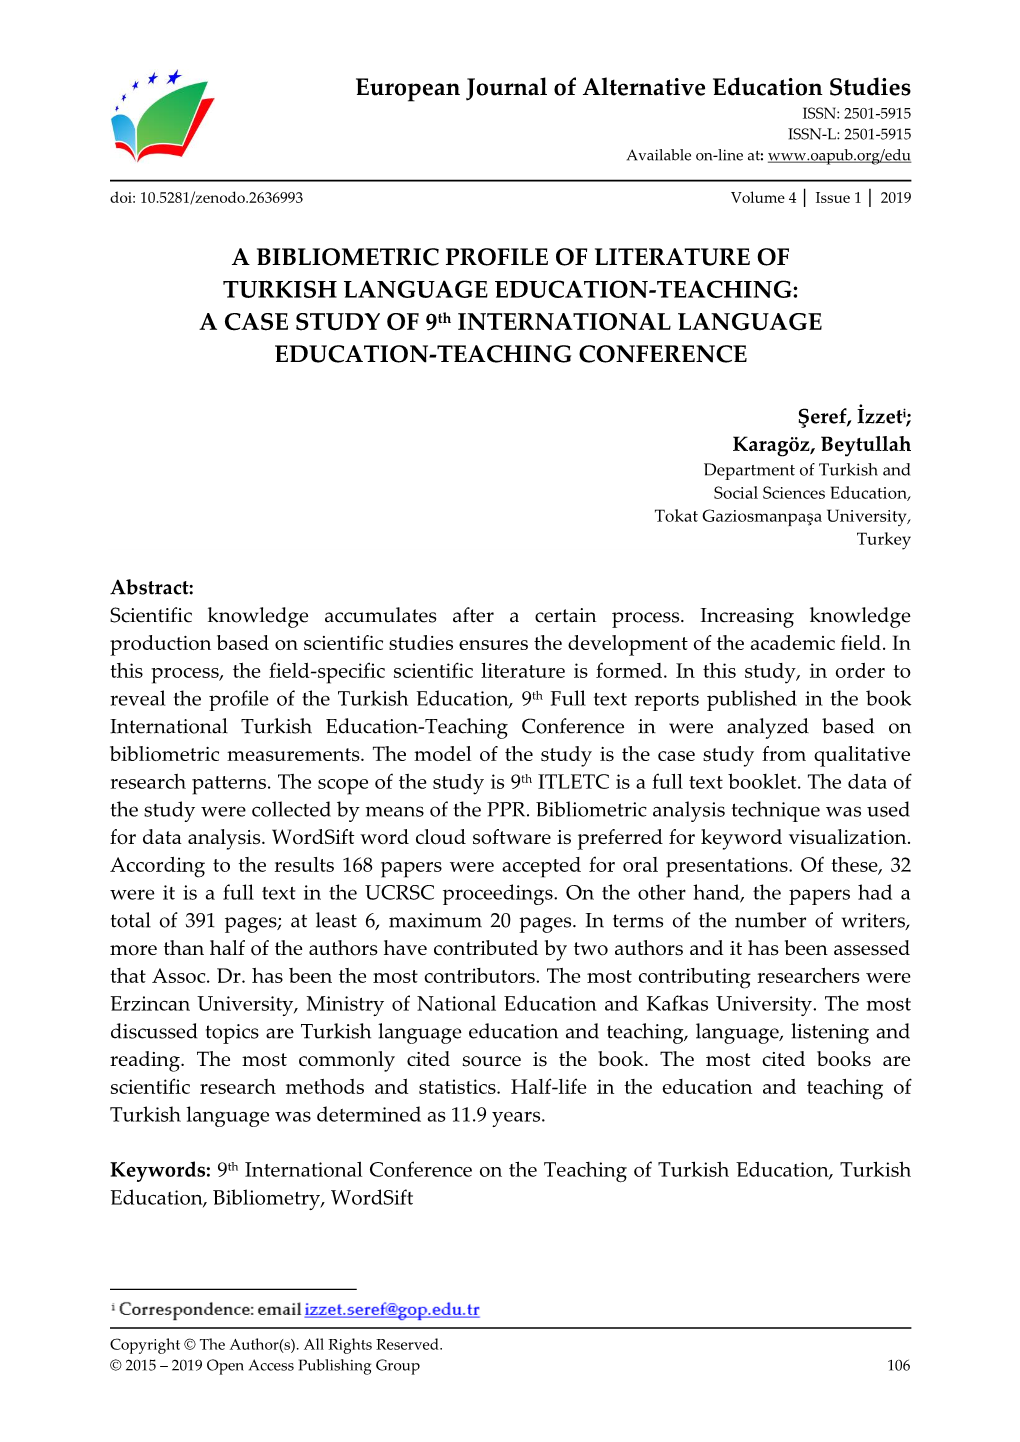 A BIBLIOMETRIC PROFILE of LITERATURE of TURKISH LANGUAGE EDUCATION-TEACHING: a CASE STUDY of 9Th INTERNATIONAL LANGUAGE EDUCATION-TEACHING CONFERENCE